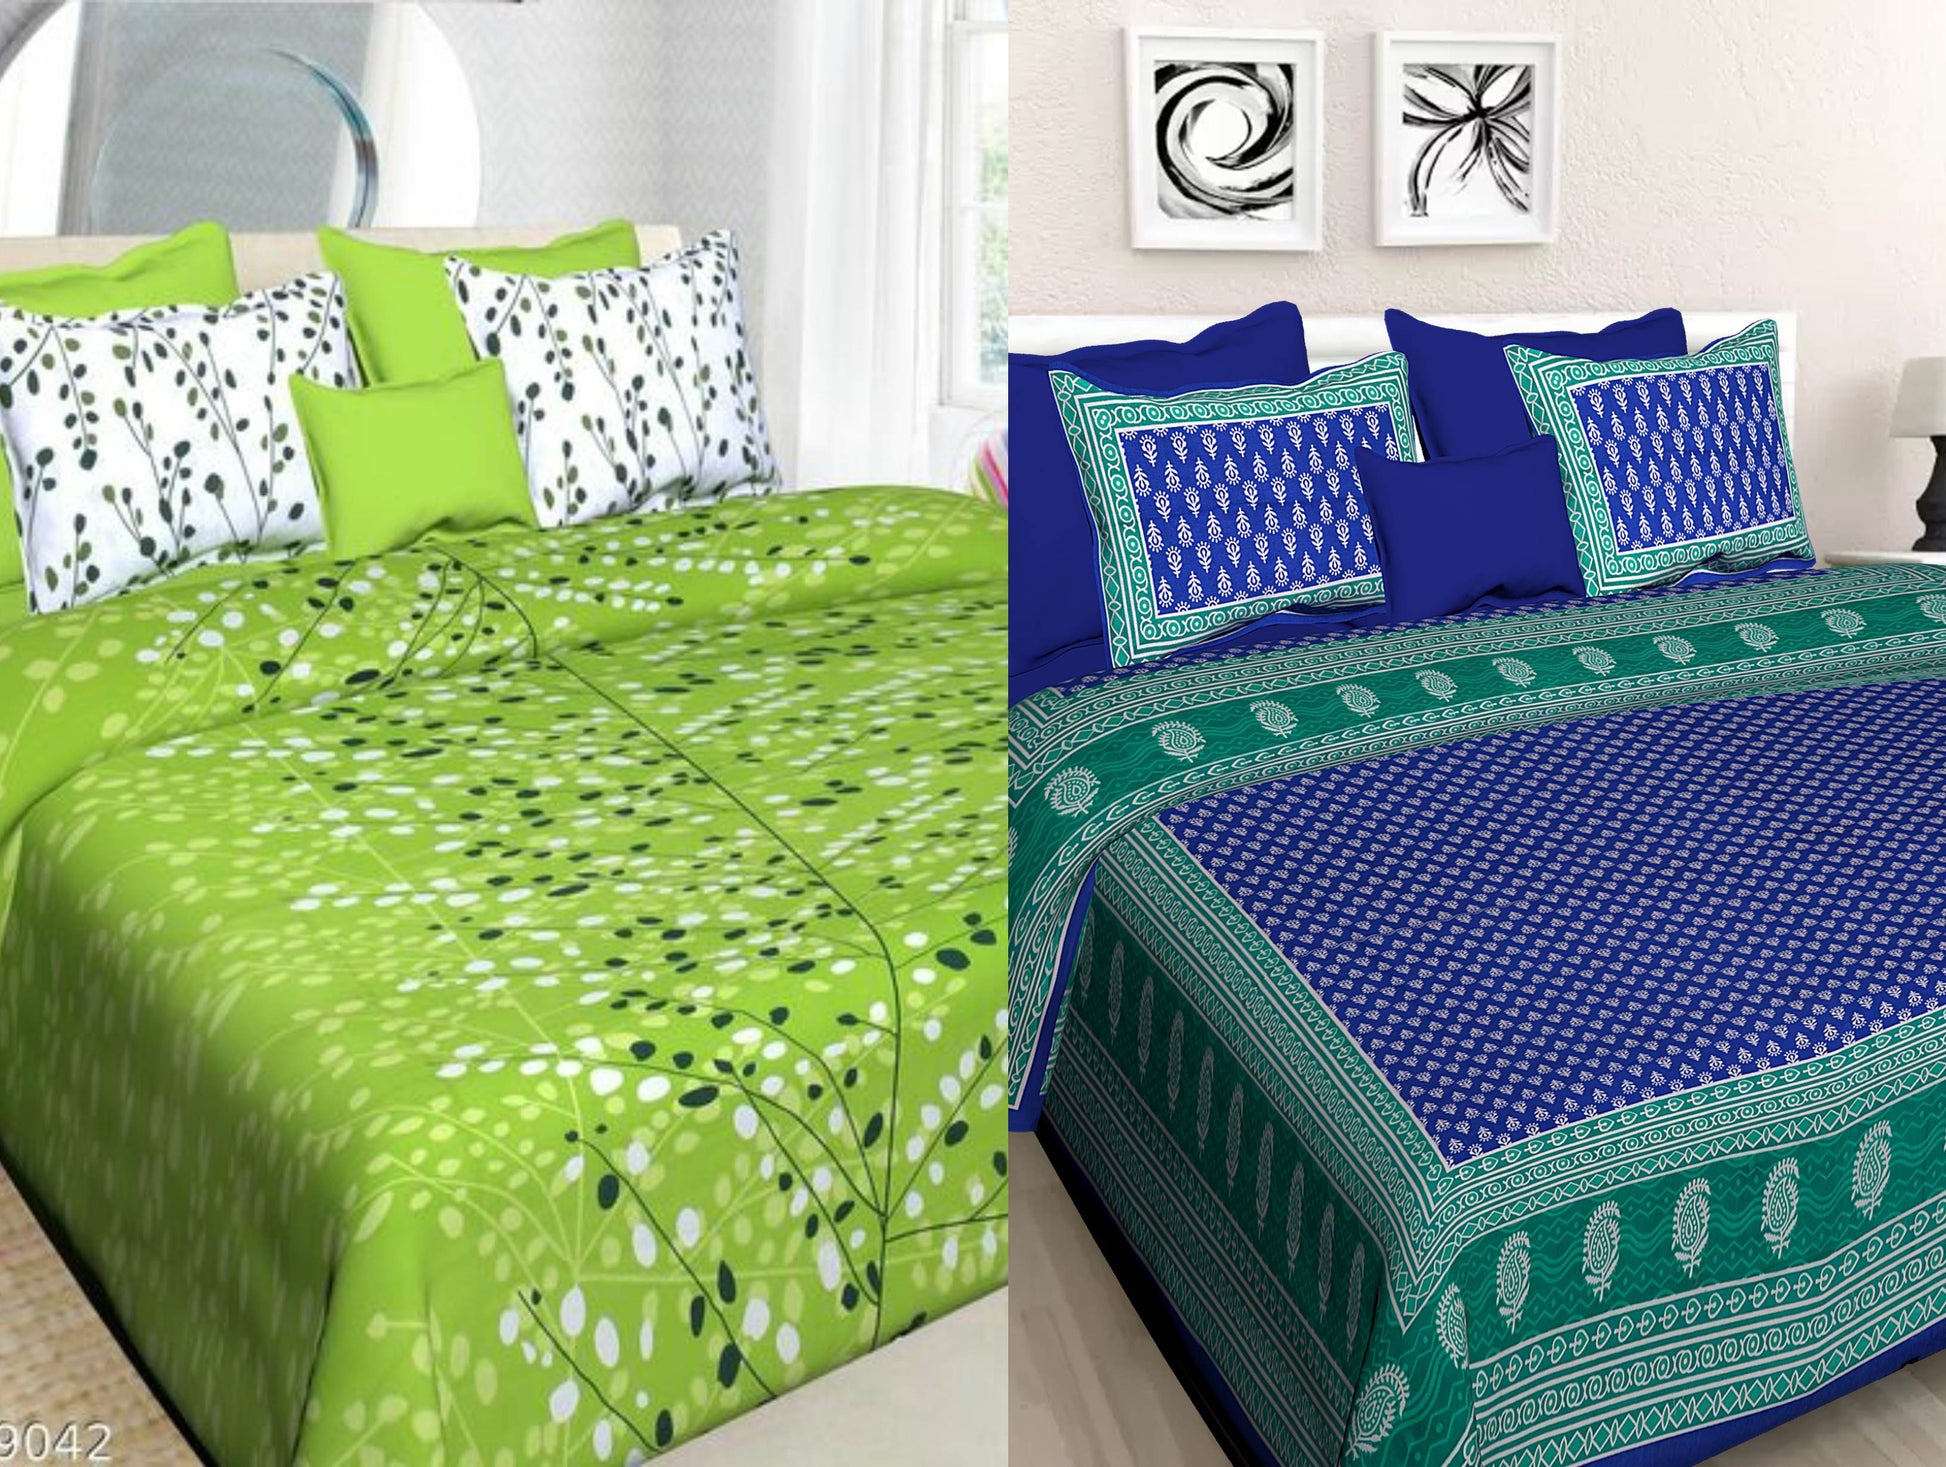 Jaipur Prints 100 % Cotton Jaipuri Rajasthani Double 2 Bedsheet Combo with 4 Pillow Cover JAIPUR PRINTS